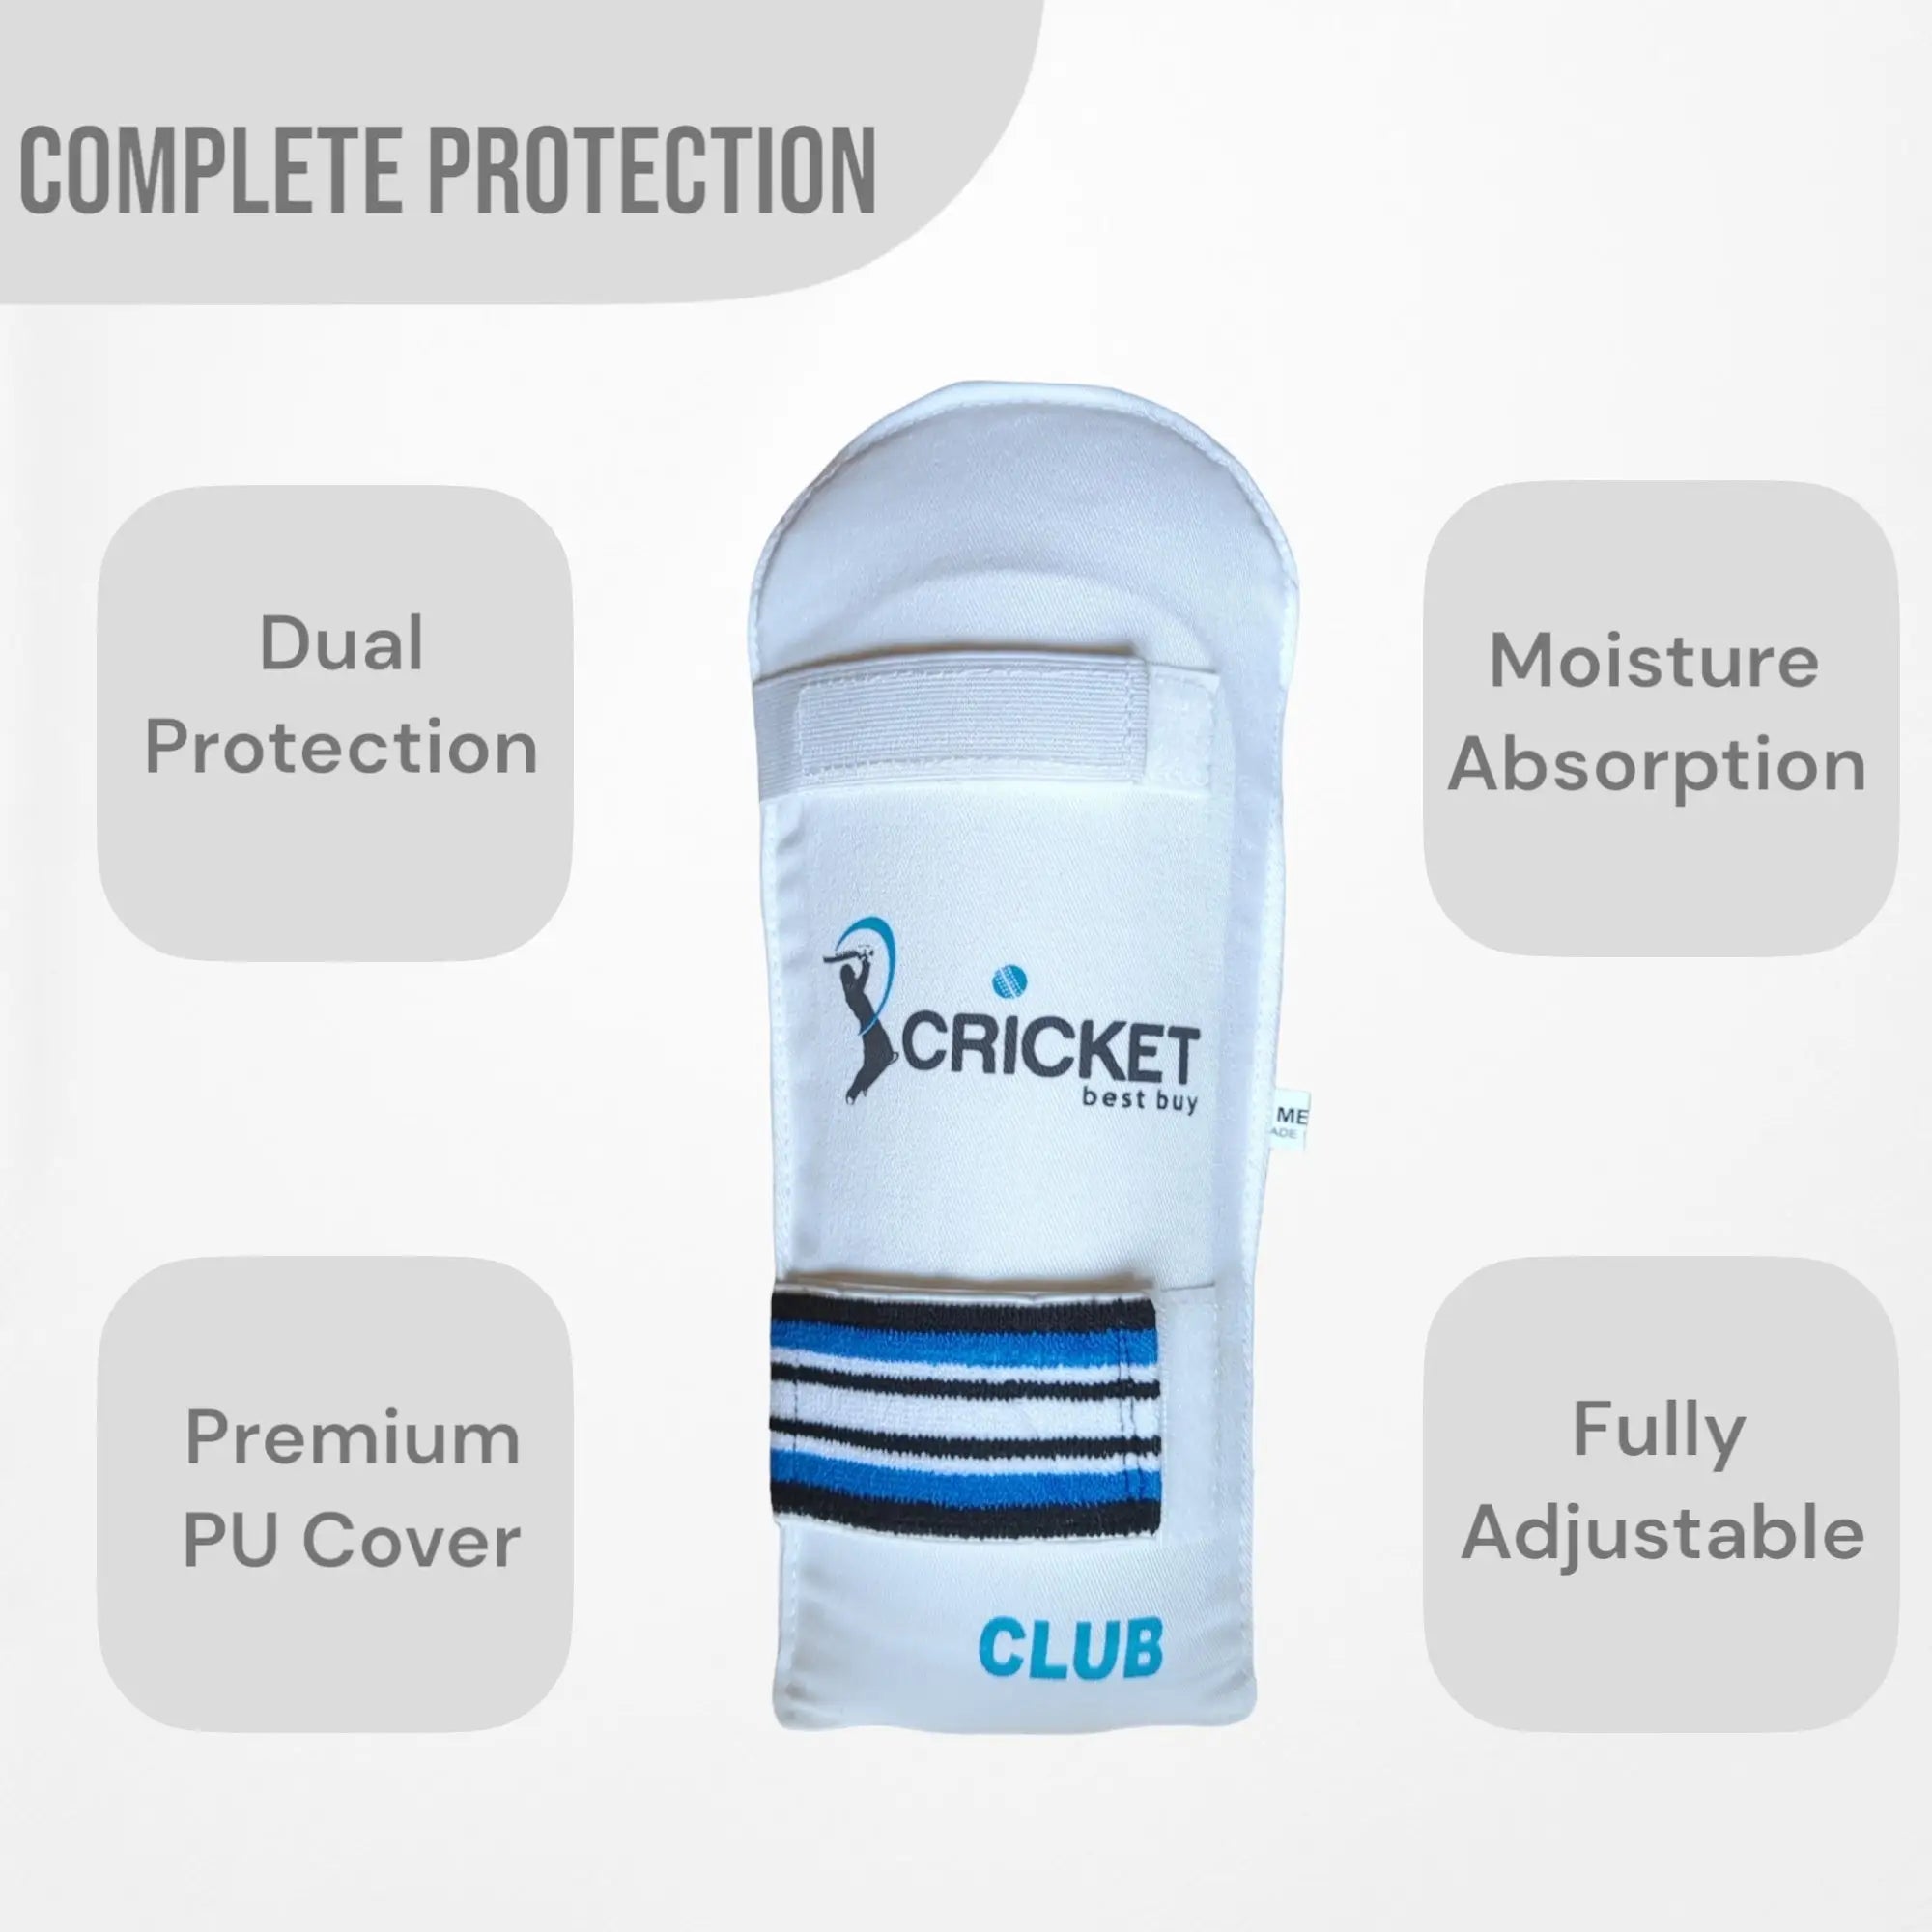 CBB Club Cricket Arm Guard Protector Padded Foam Elastic Velcro Strap - BODY PROTECTORS - ARM GUARDS